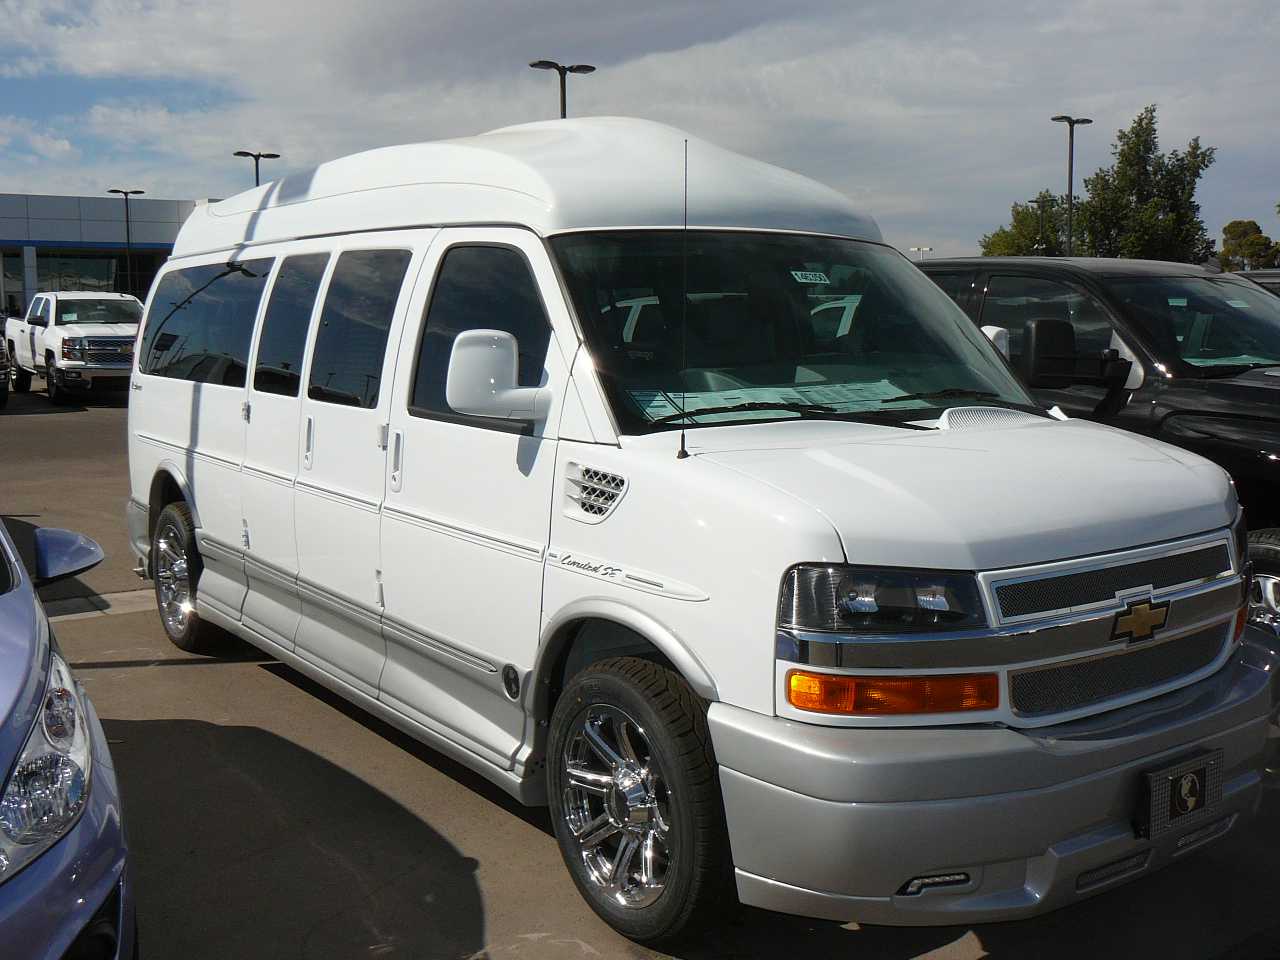 2014 Explorer Van CHEVROLET EXPRESS White Explorer Van Limited SE